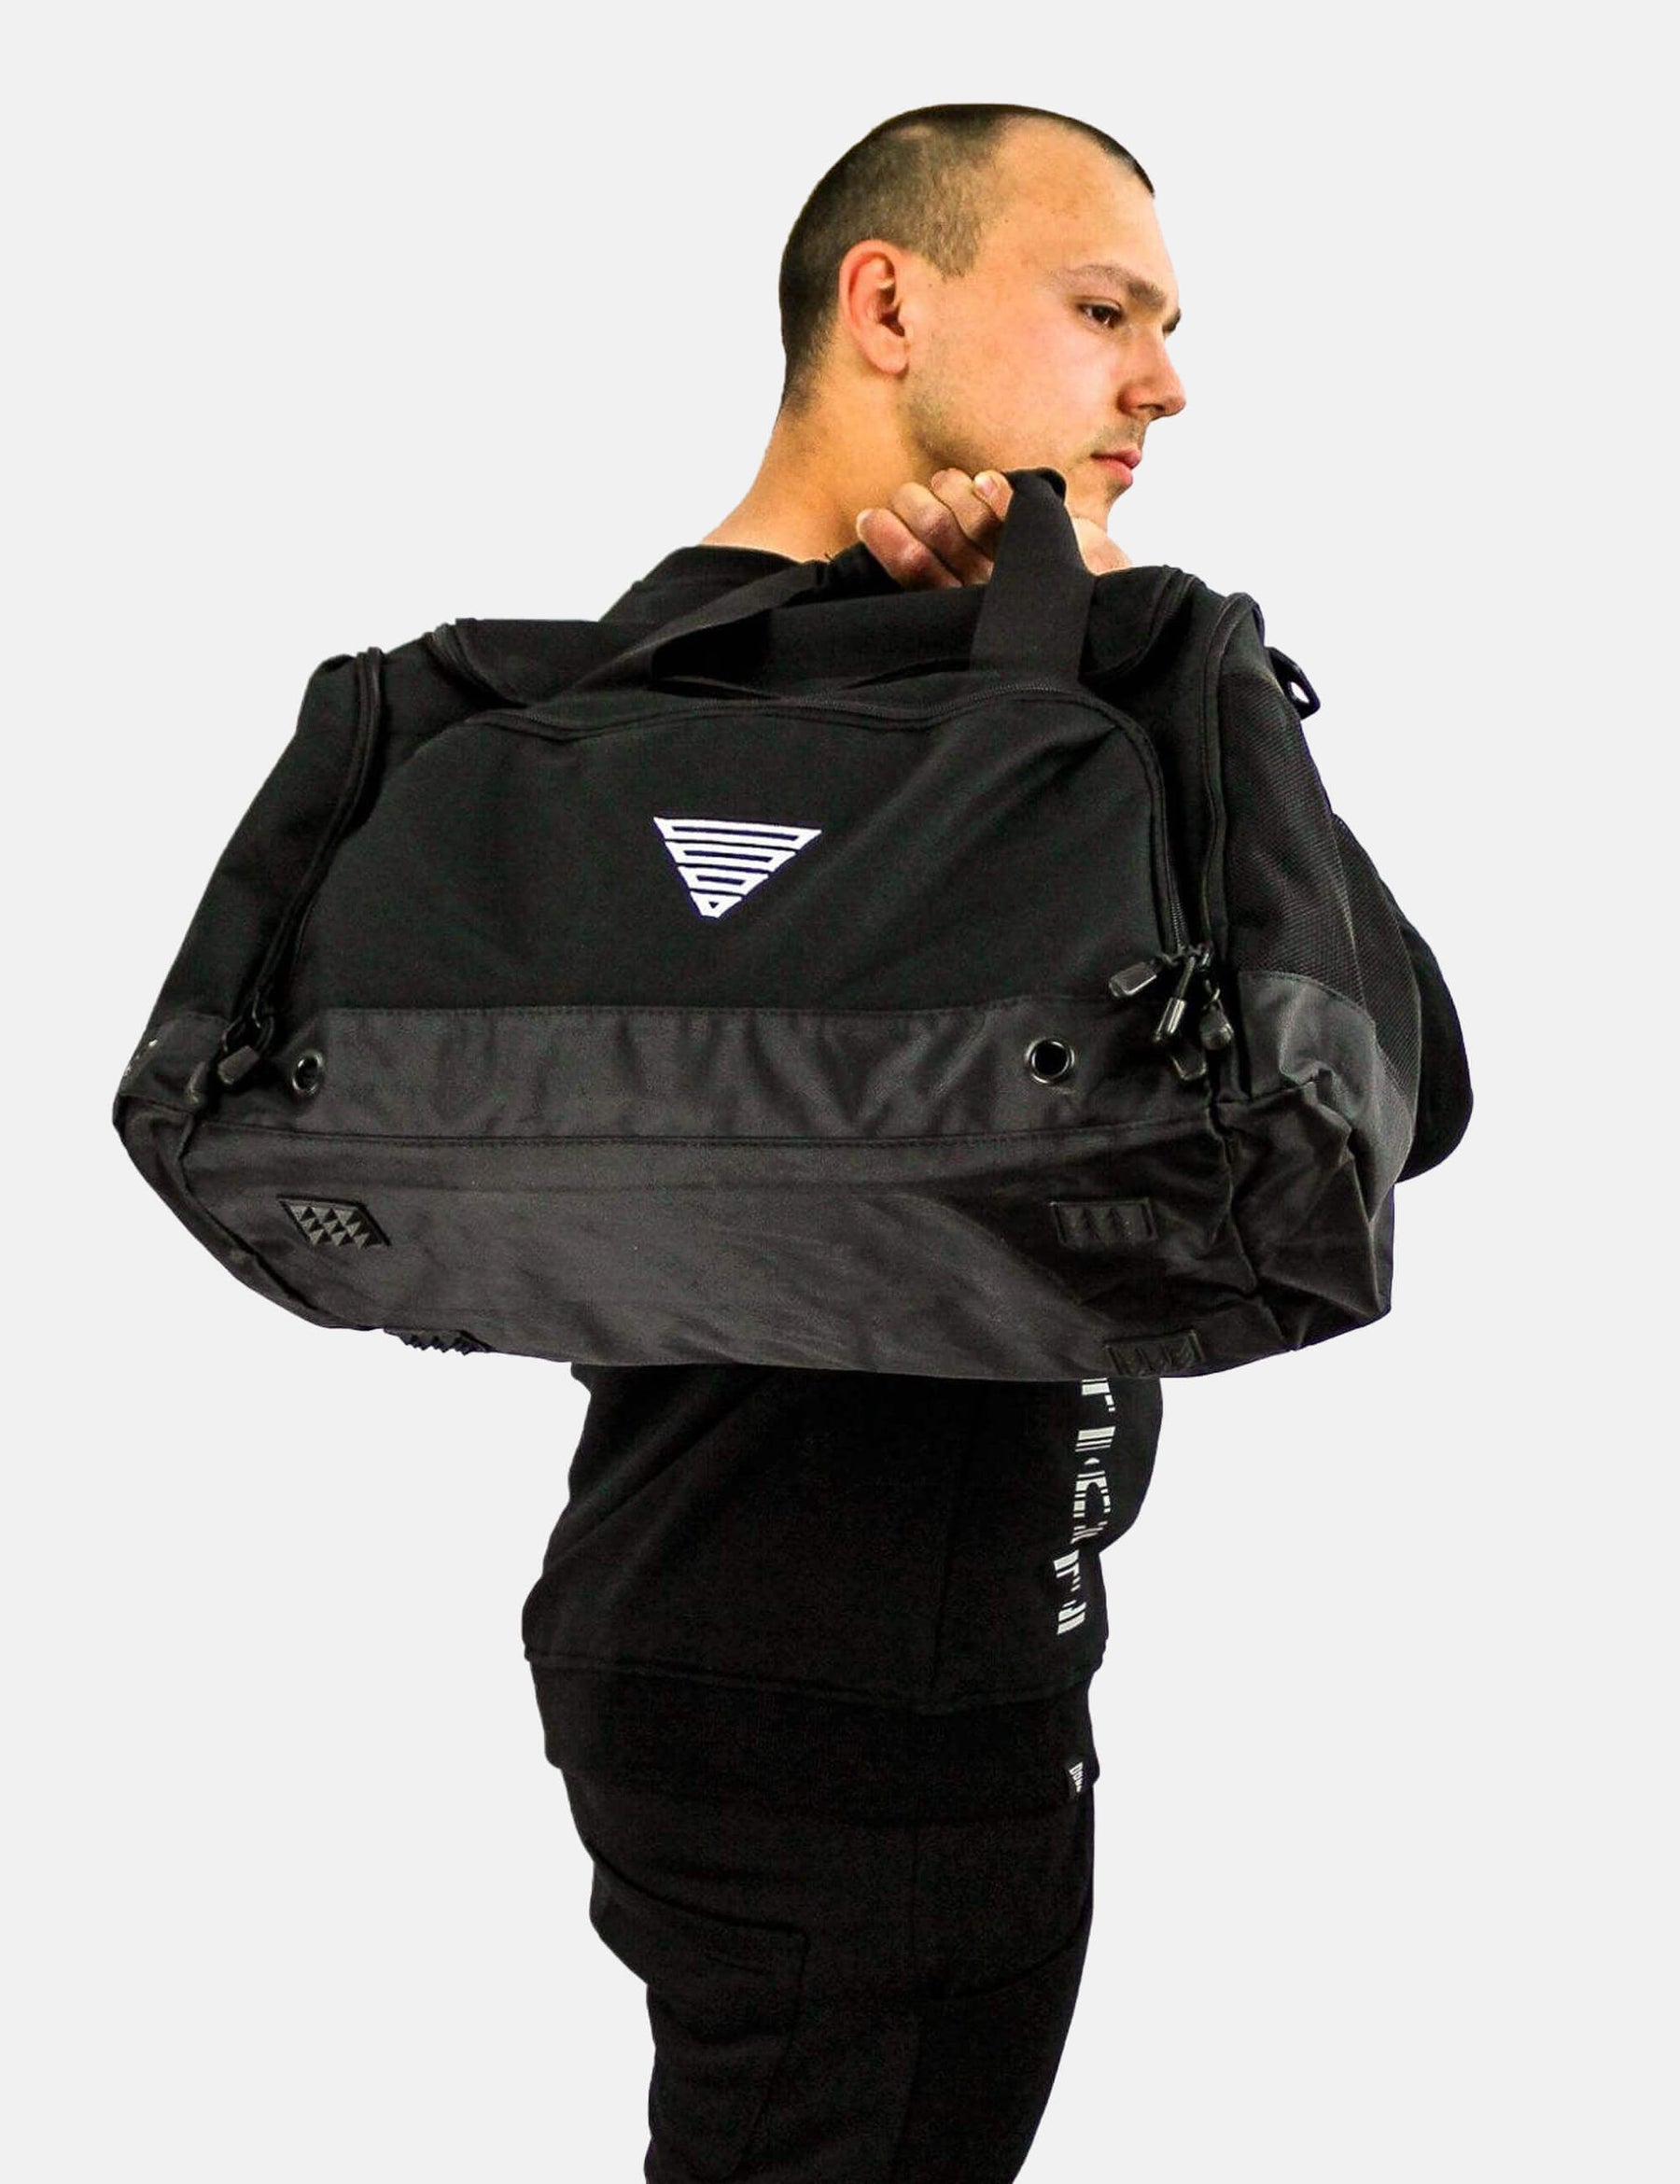 Premium Bag 2.0 Black For Your Workout | GORNATION